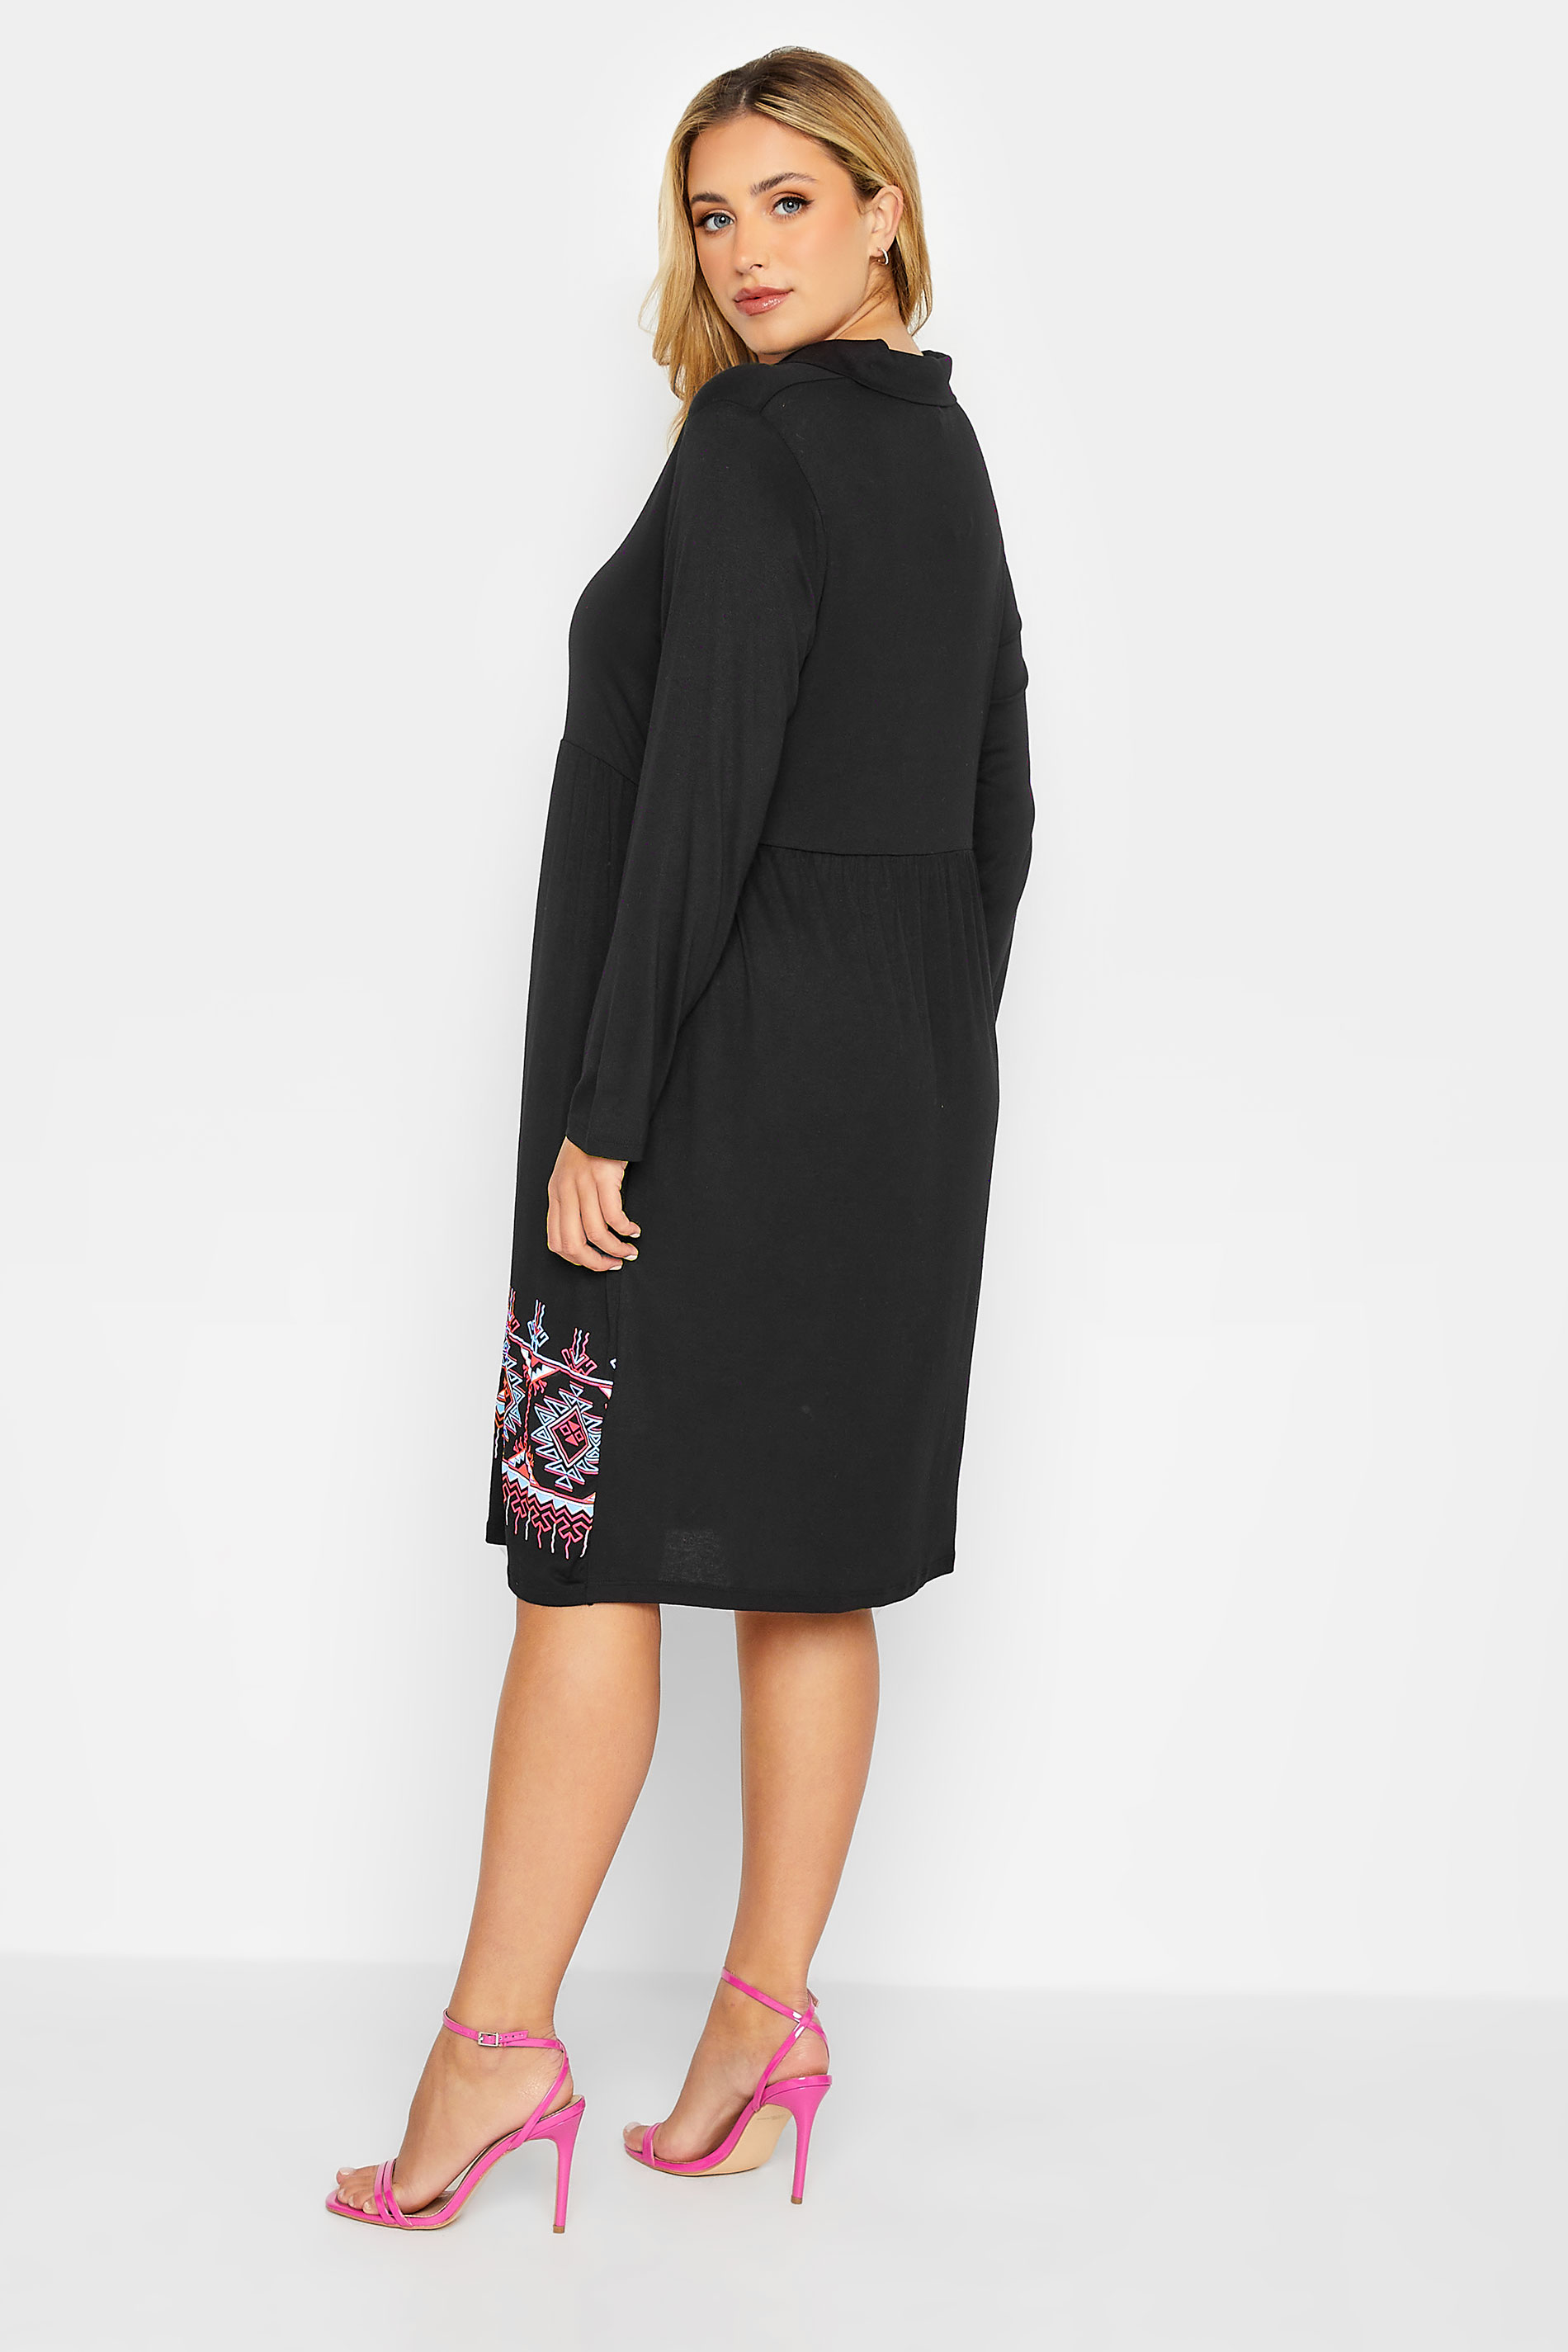 Curve Plus Size Black Aztec Print Midi Shirt Dress | Yours Clothing  3